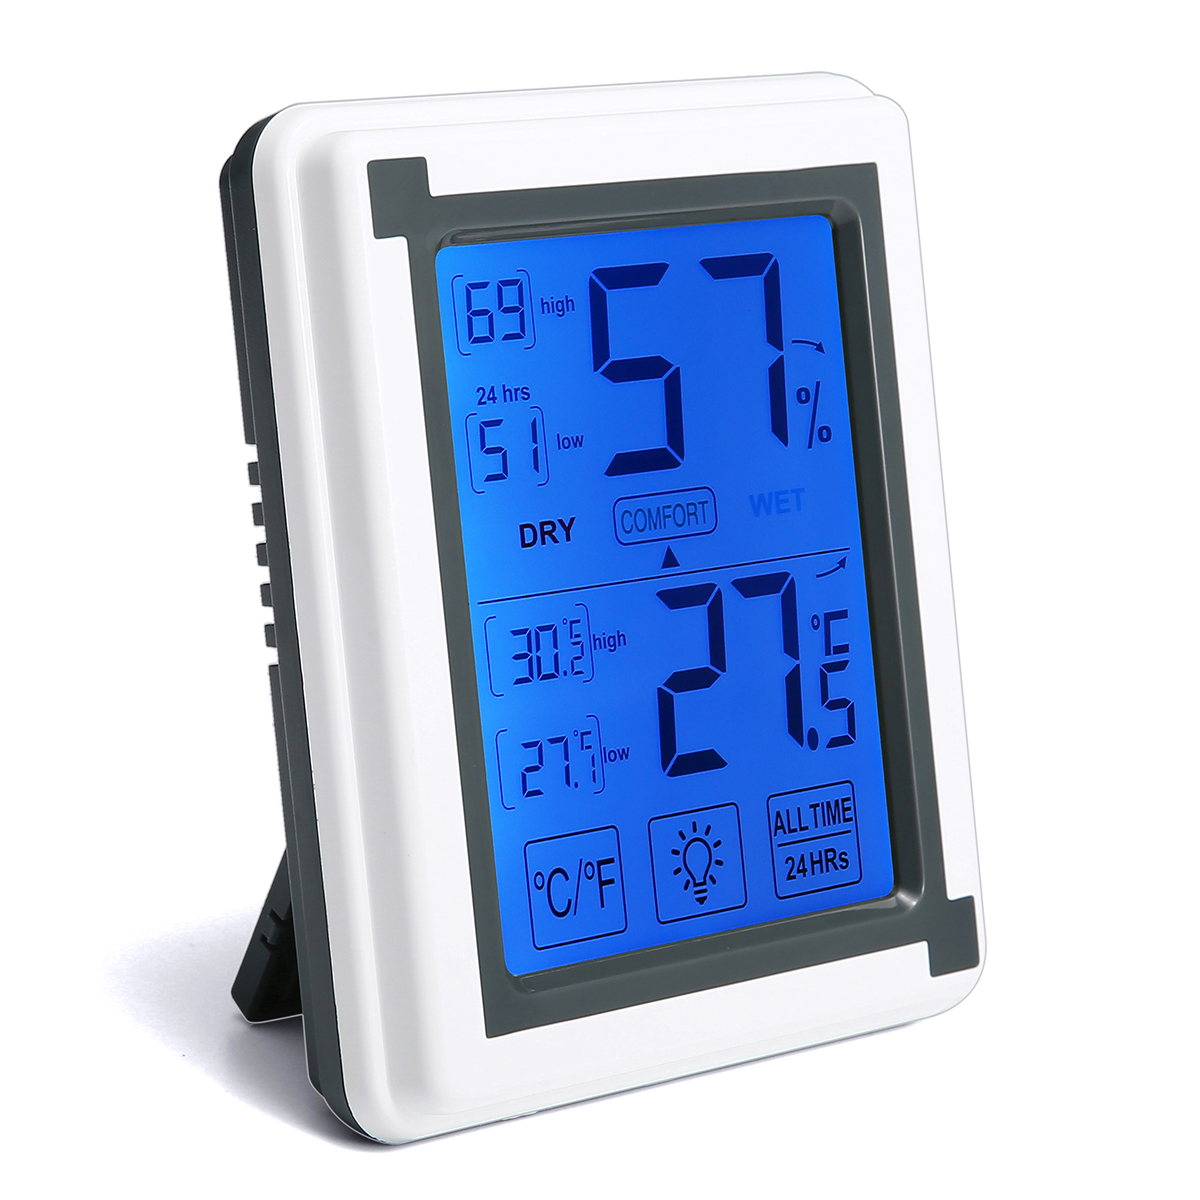 

Loskii Цифровой гигрометр для помещений Термометр Влажность Монитор LCD Подсветка сенсорного экрана Часы